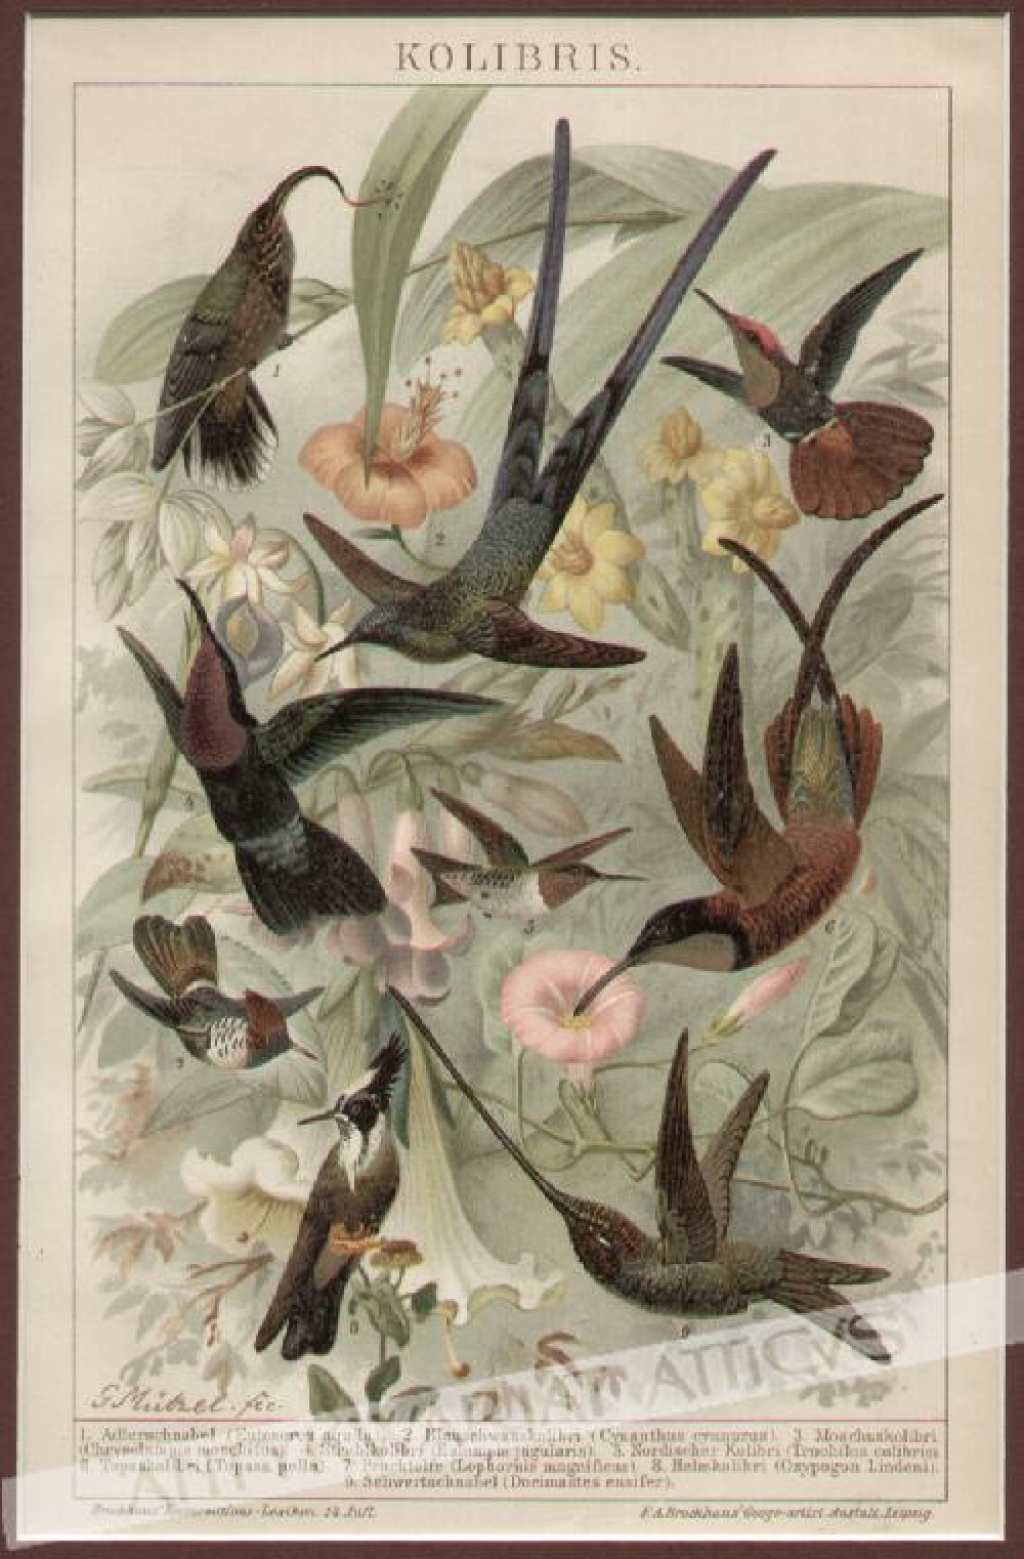 [rycina, 1895] Kolibris [kolibry]